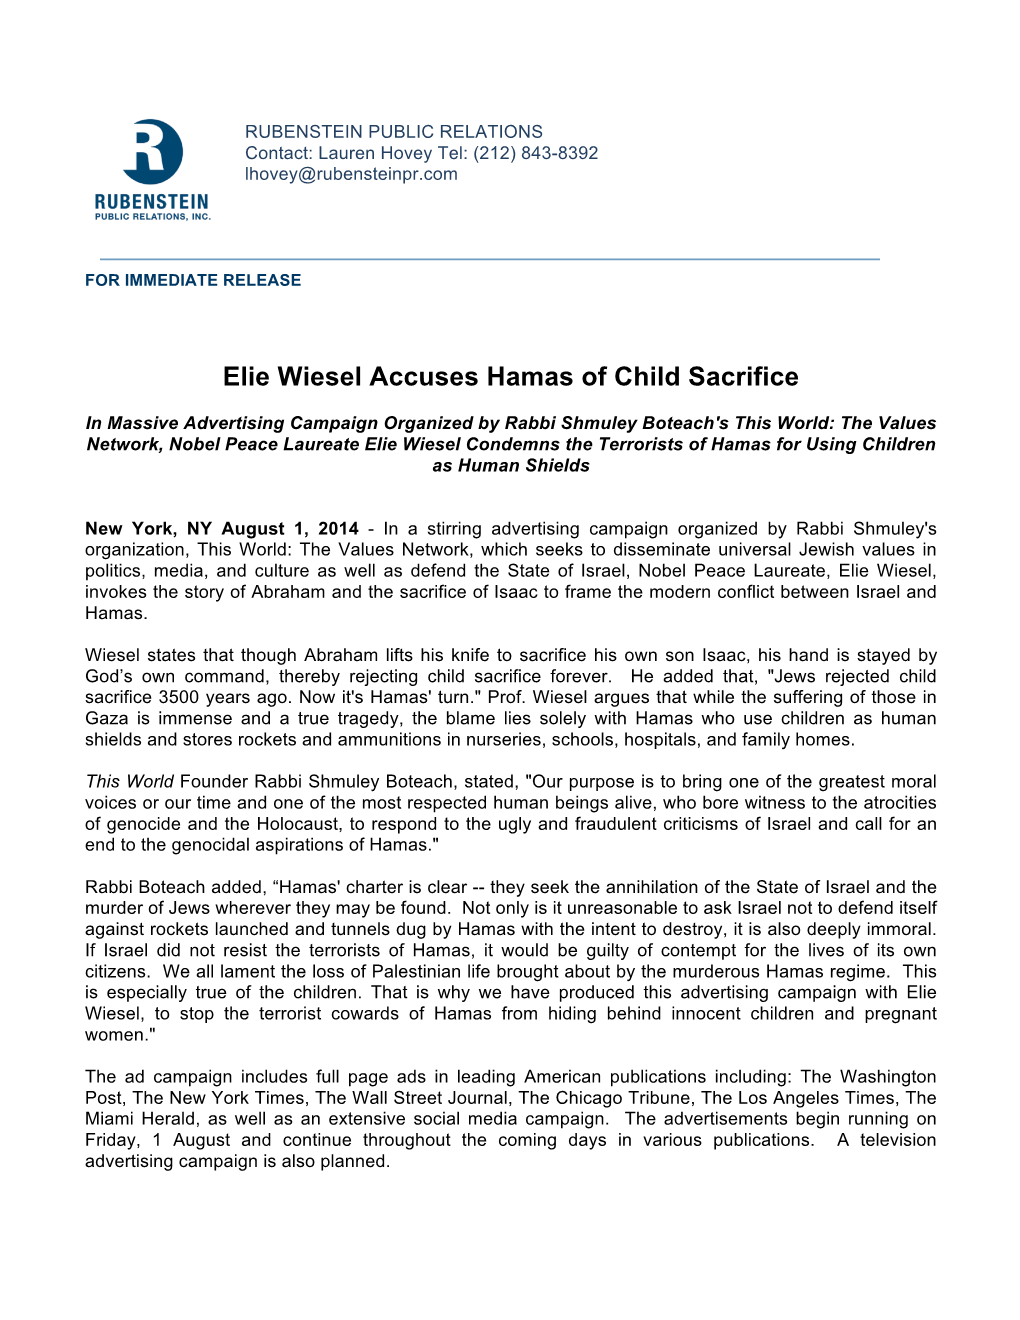 Elie Wiesel, Hamas Child Sacrifice 8.1.14